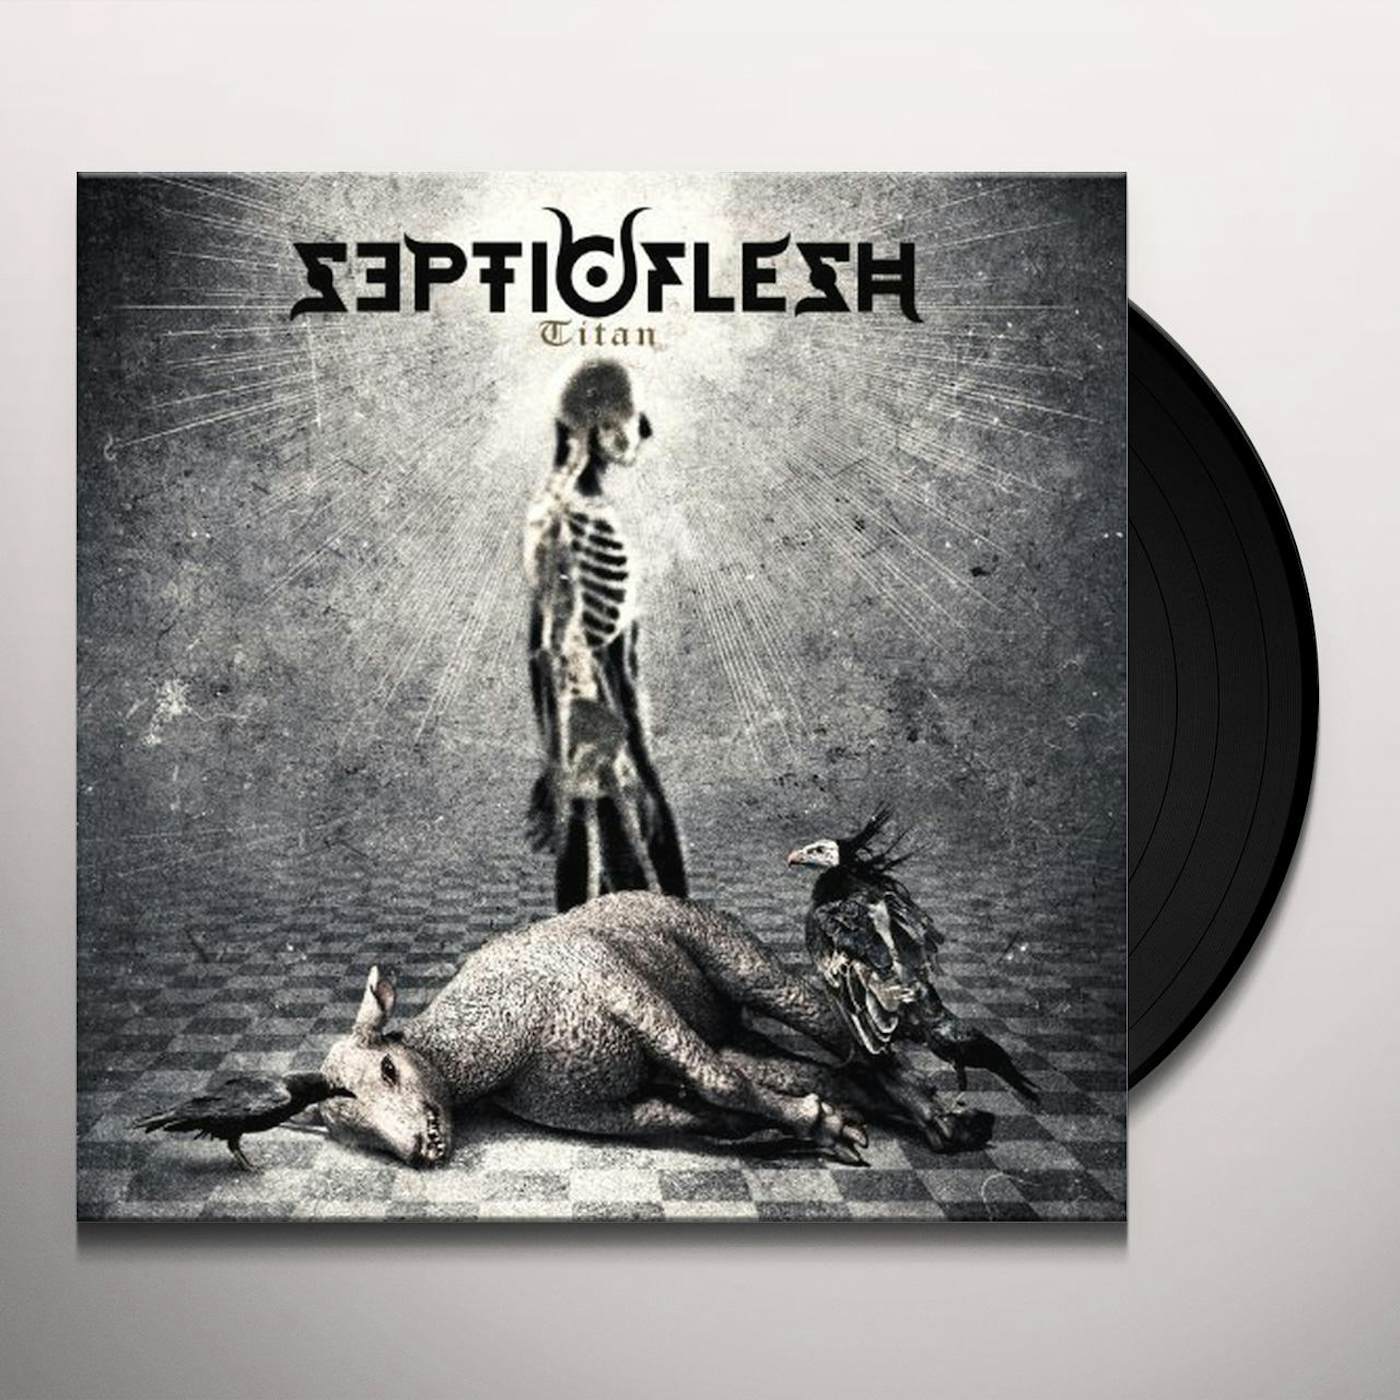 Septicflesh Titan Vinyl Record